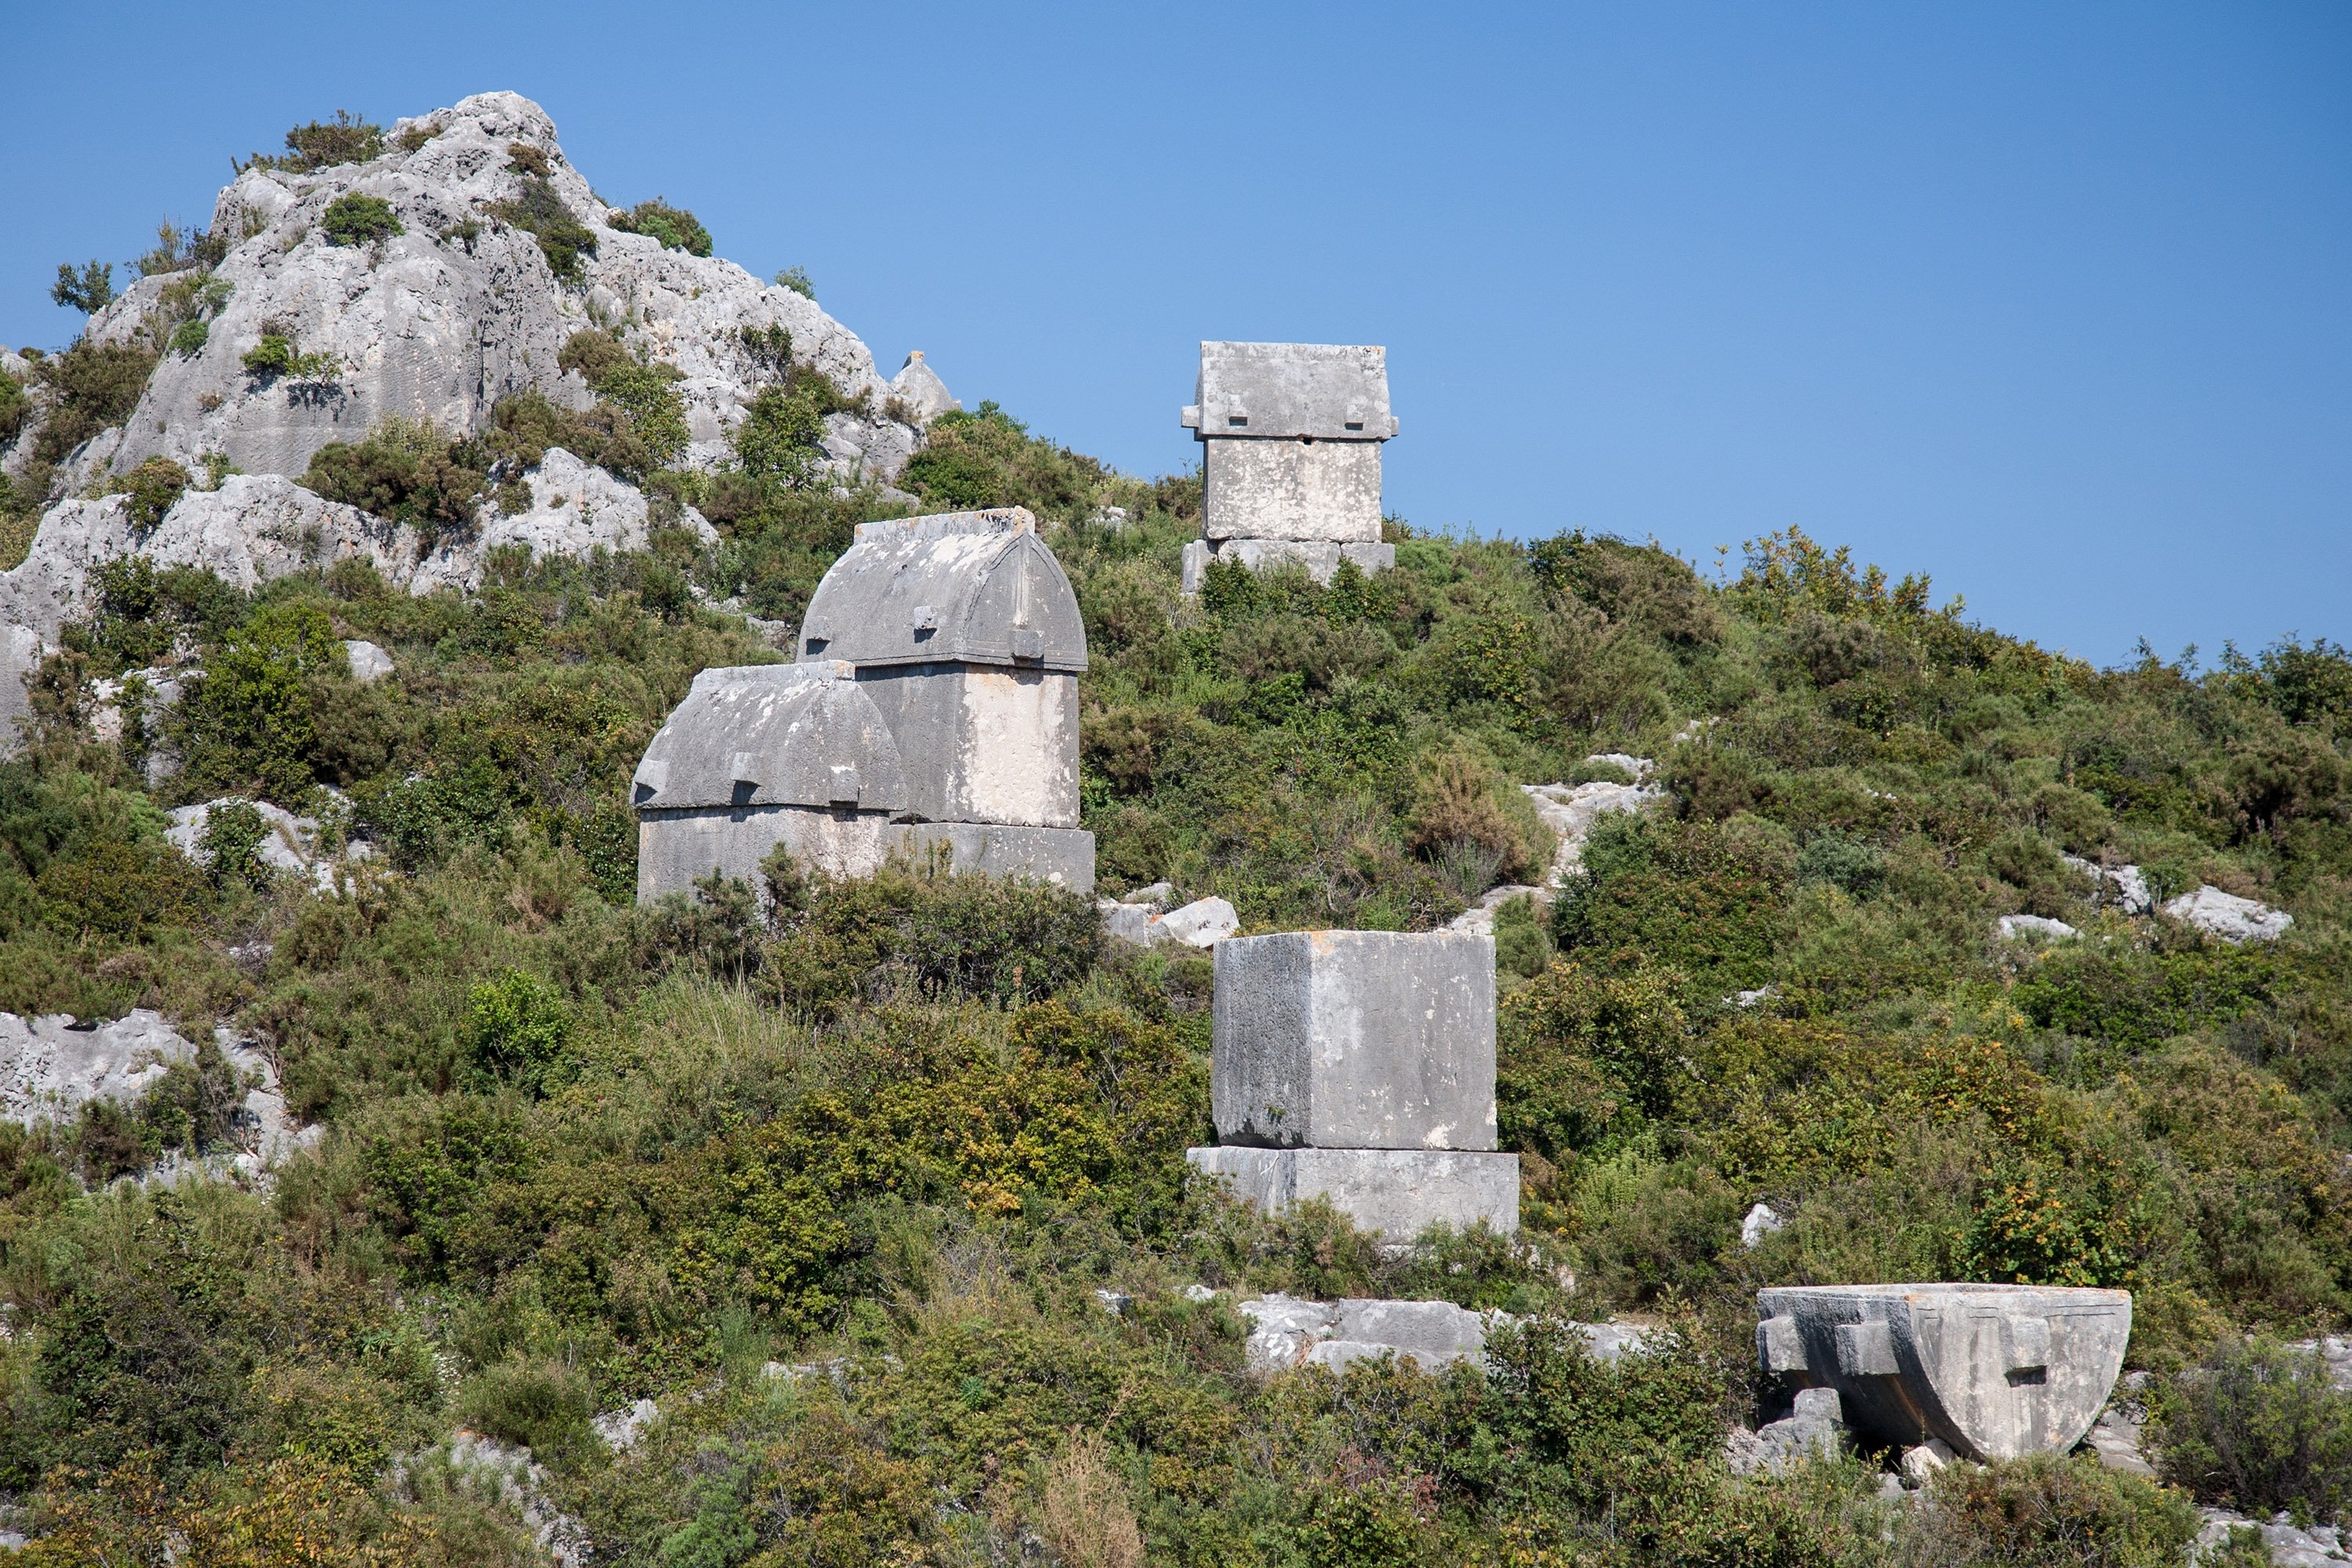 Lycian tombs in Kaleköy (Simena) along the Lycian way, the long-distance trekking route passing through Muğla, Turkey. (Shutterstock Photo)